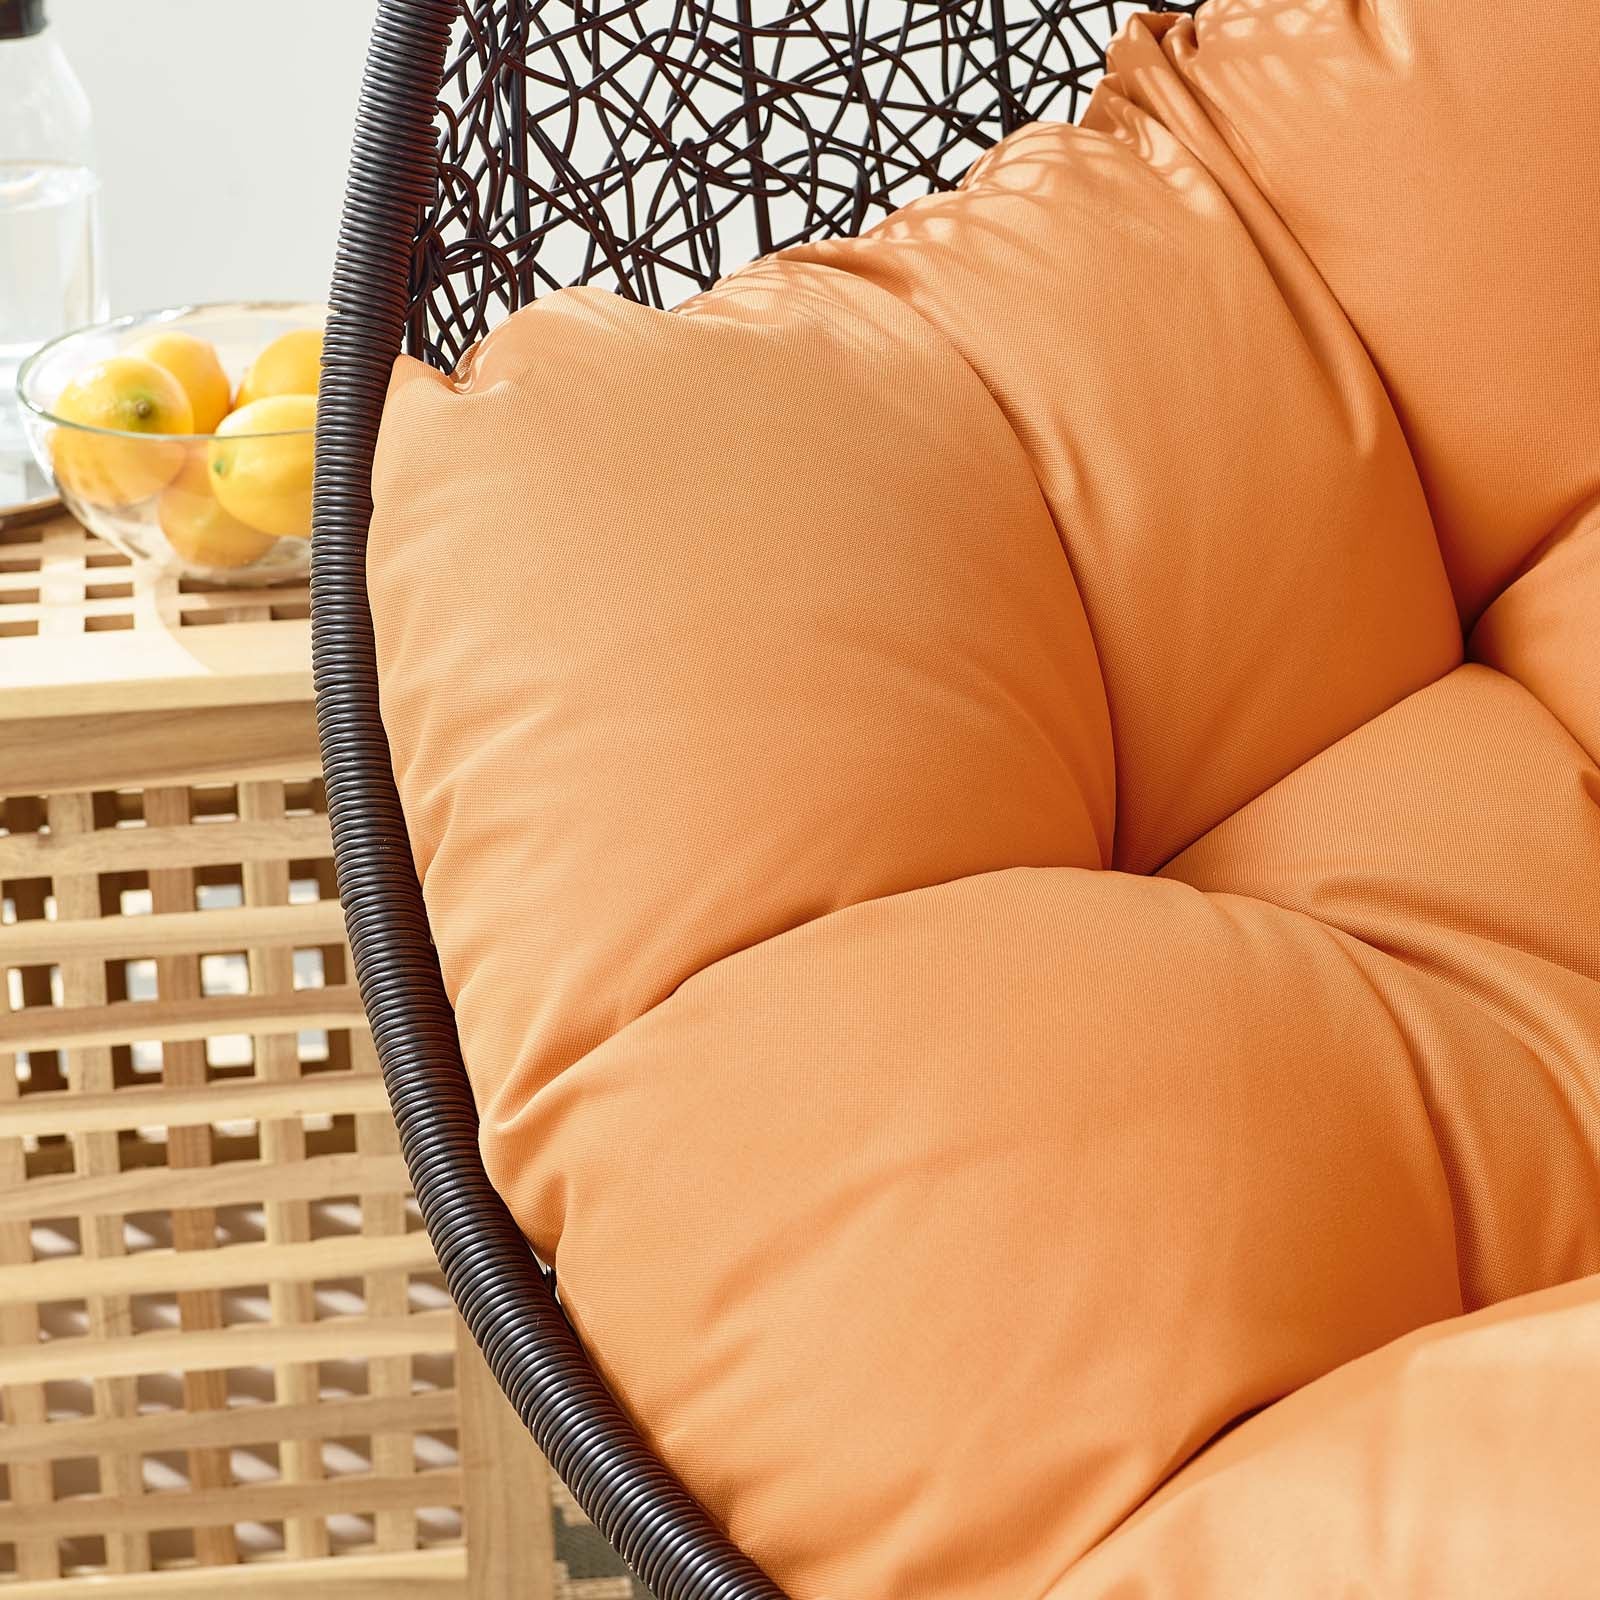 Modway Outdoor Swings - Encase Swing Outdoor Patio Lounge Chair Orange